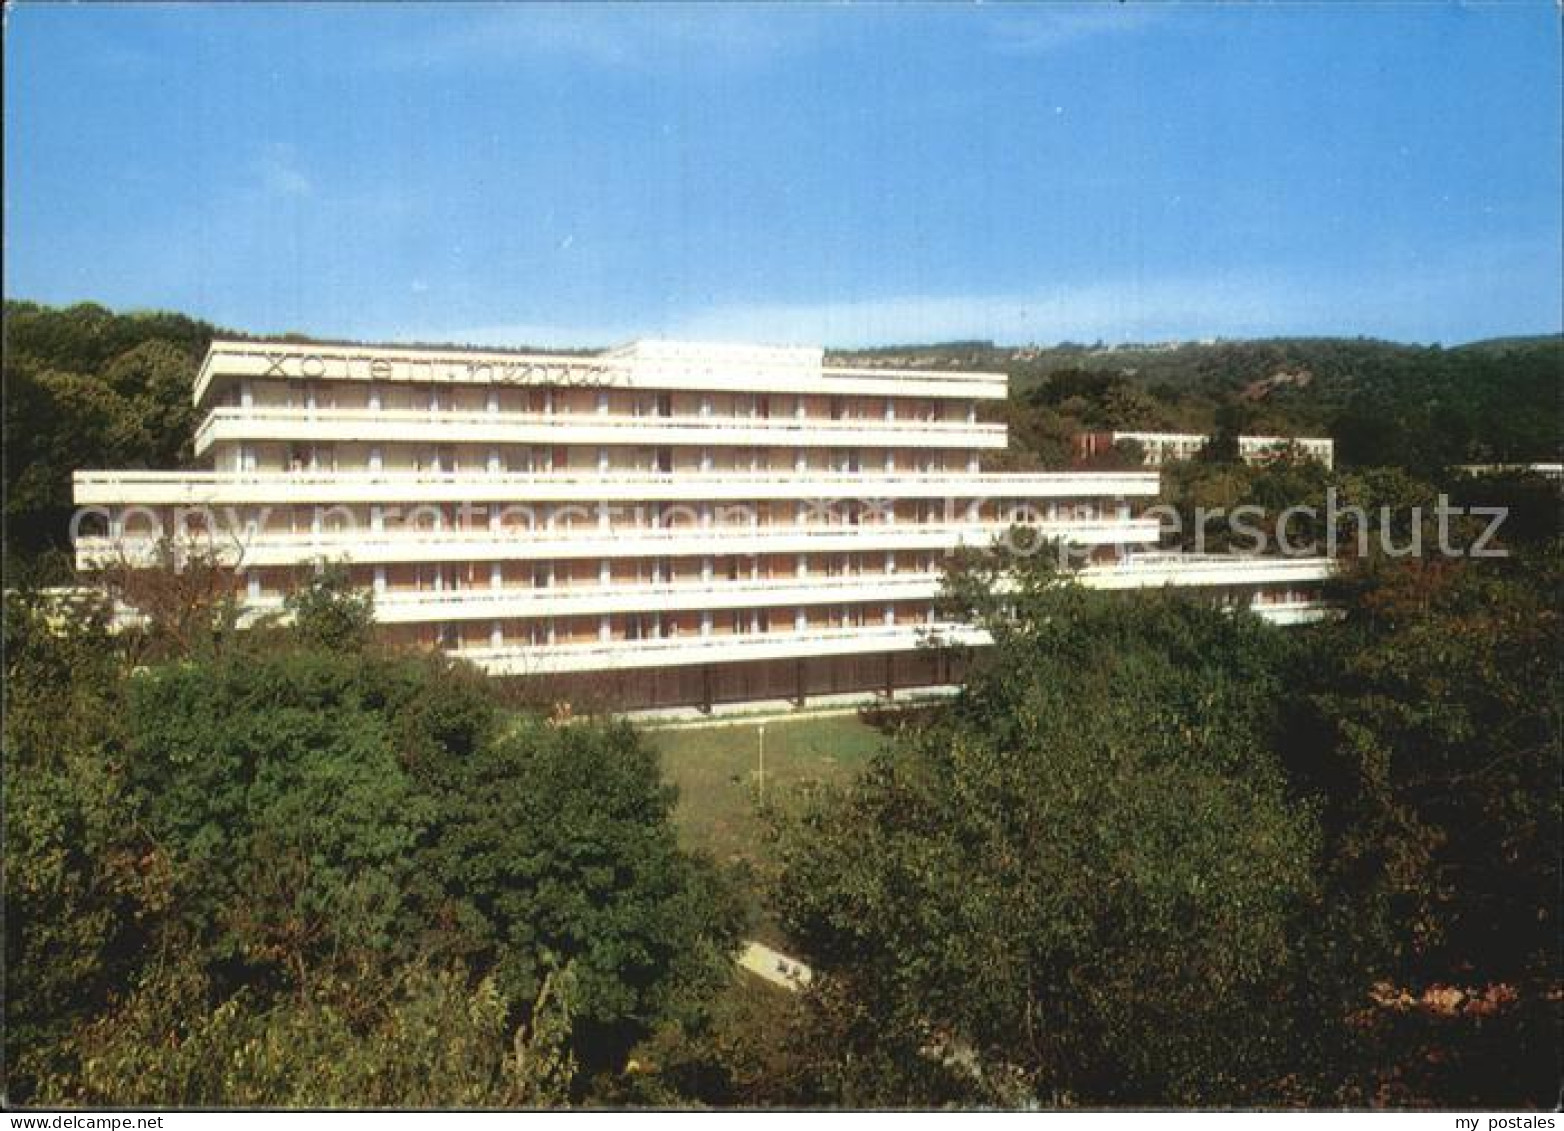 72534031 Slatni Pjassazi Hotel Perla Warna Bulgarien - Bulgarie